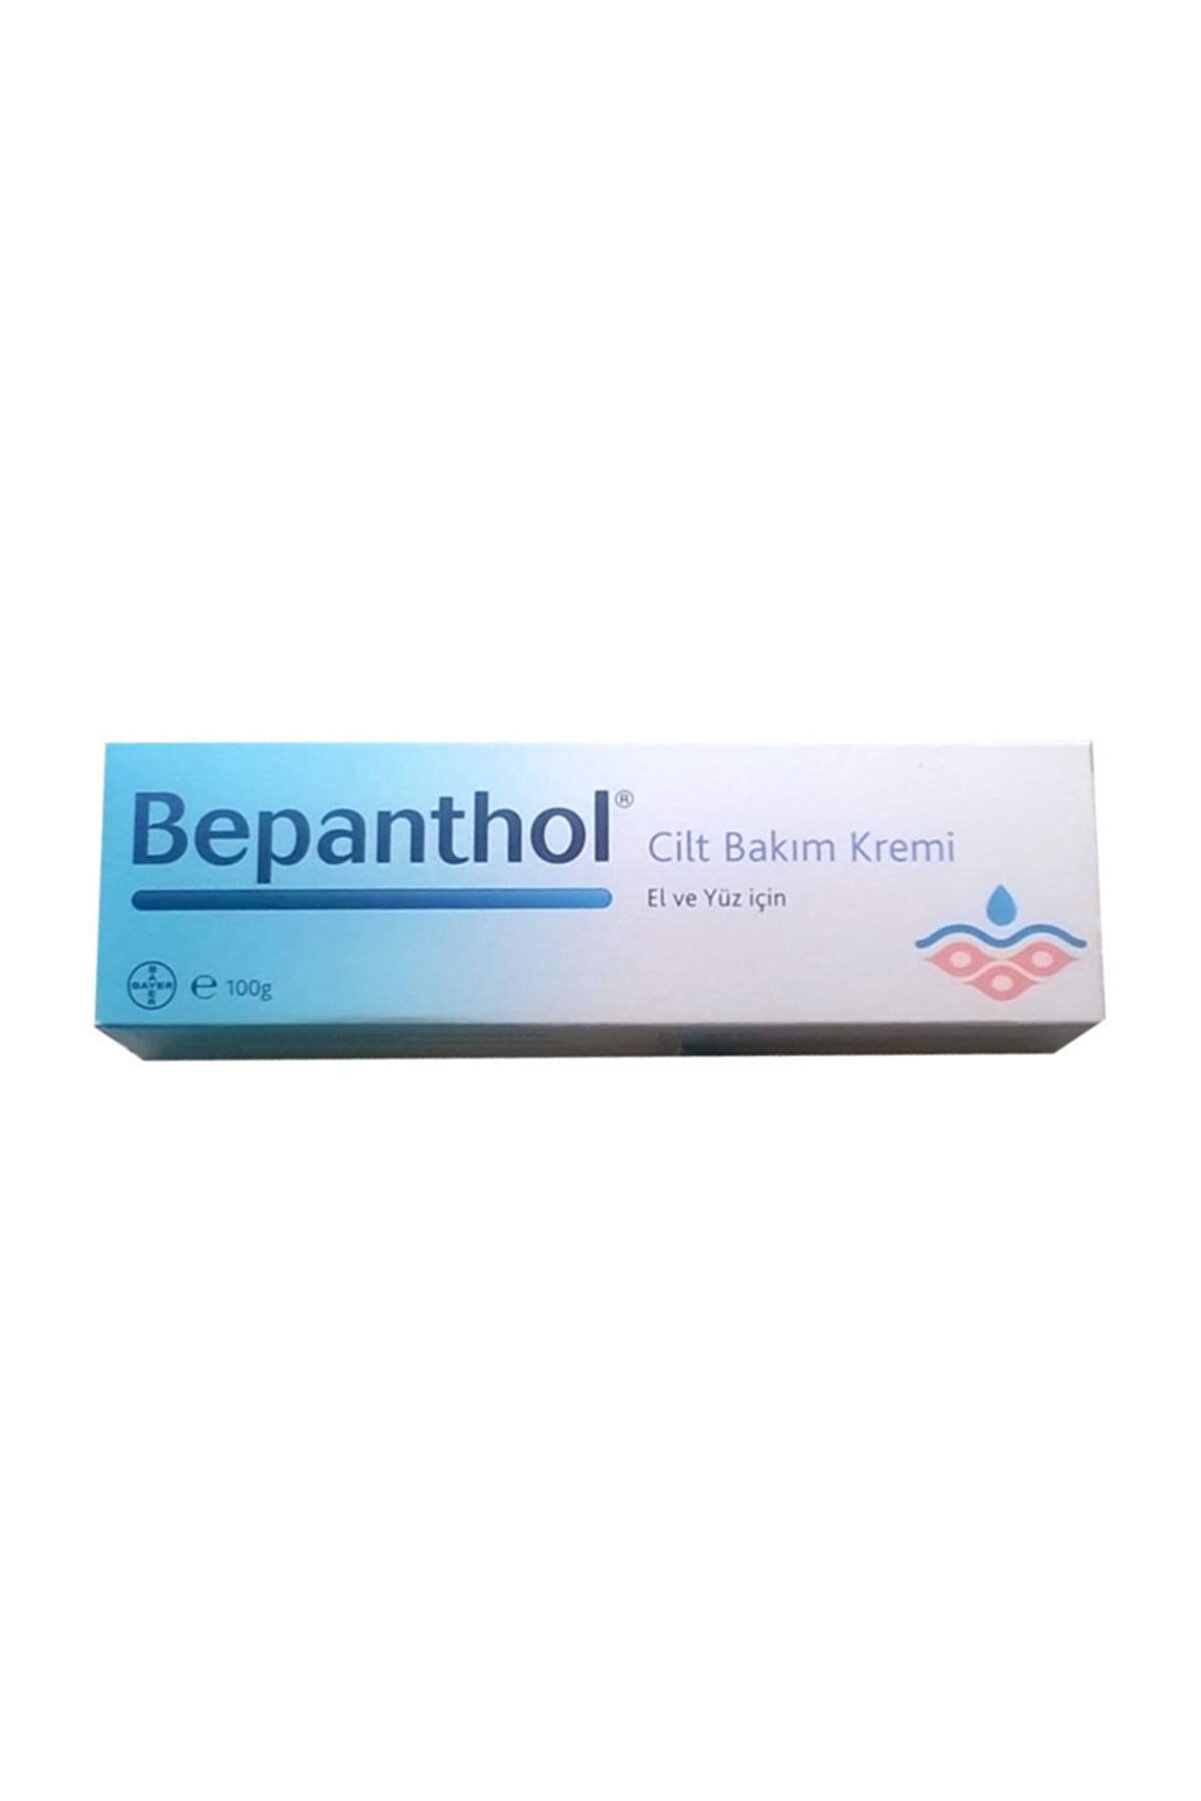 Bepanthol ®  Cilt Bakım Kremi 100gr.